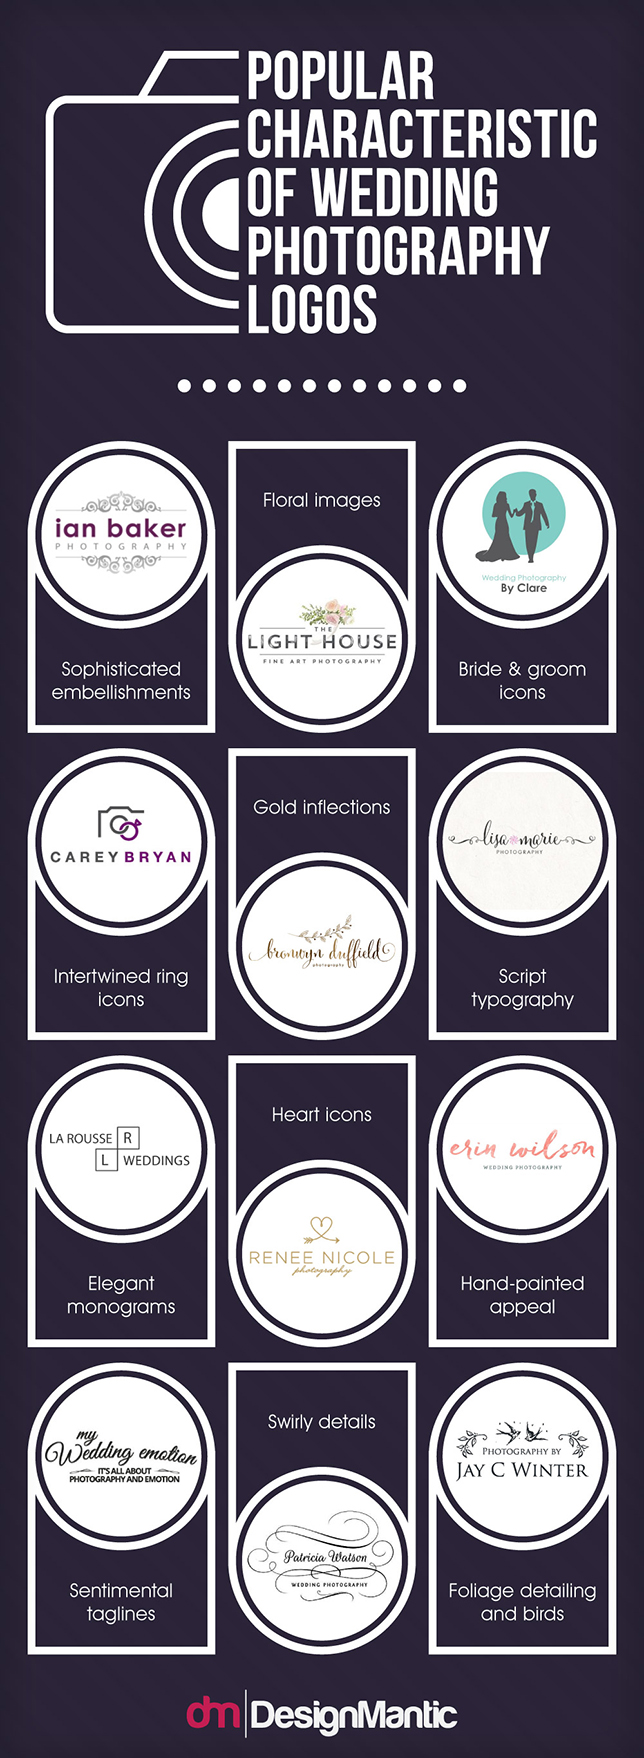 Popular characteristics of wedding logos